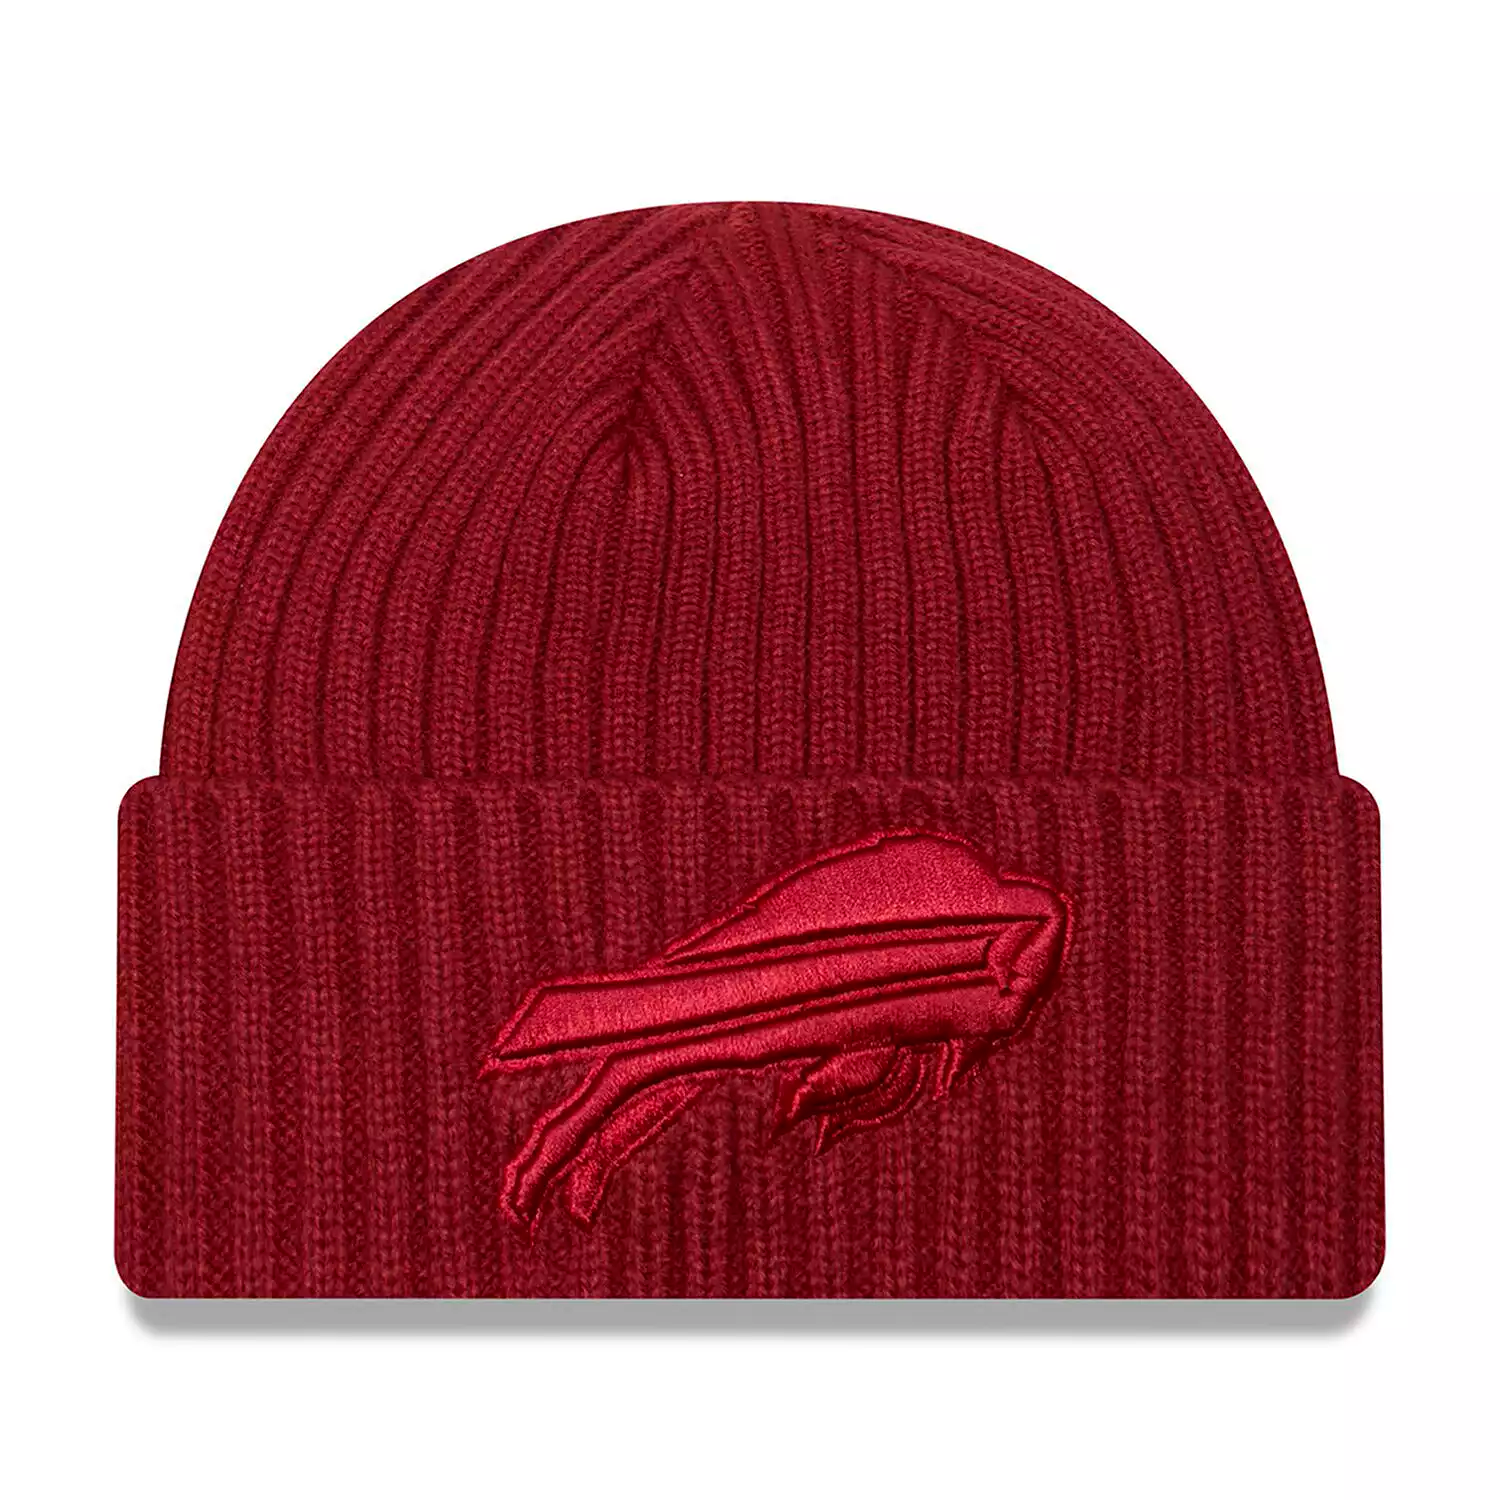 New Era Buffalo Bills Knit Color Pack Cap - Red